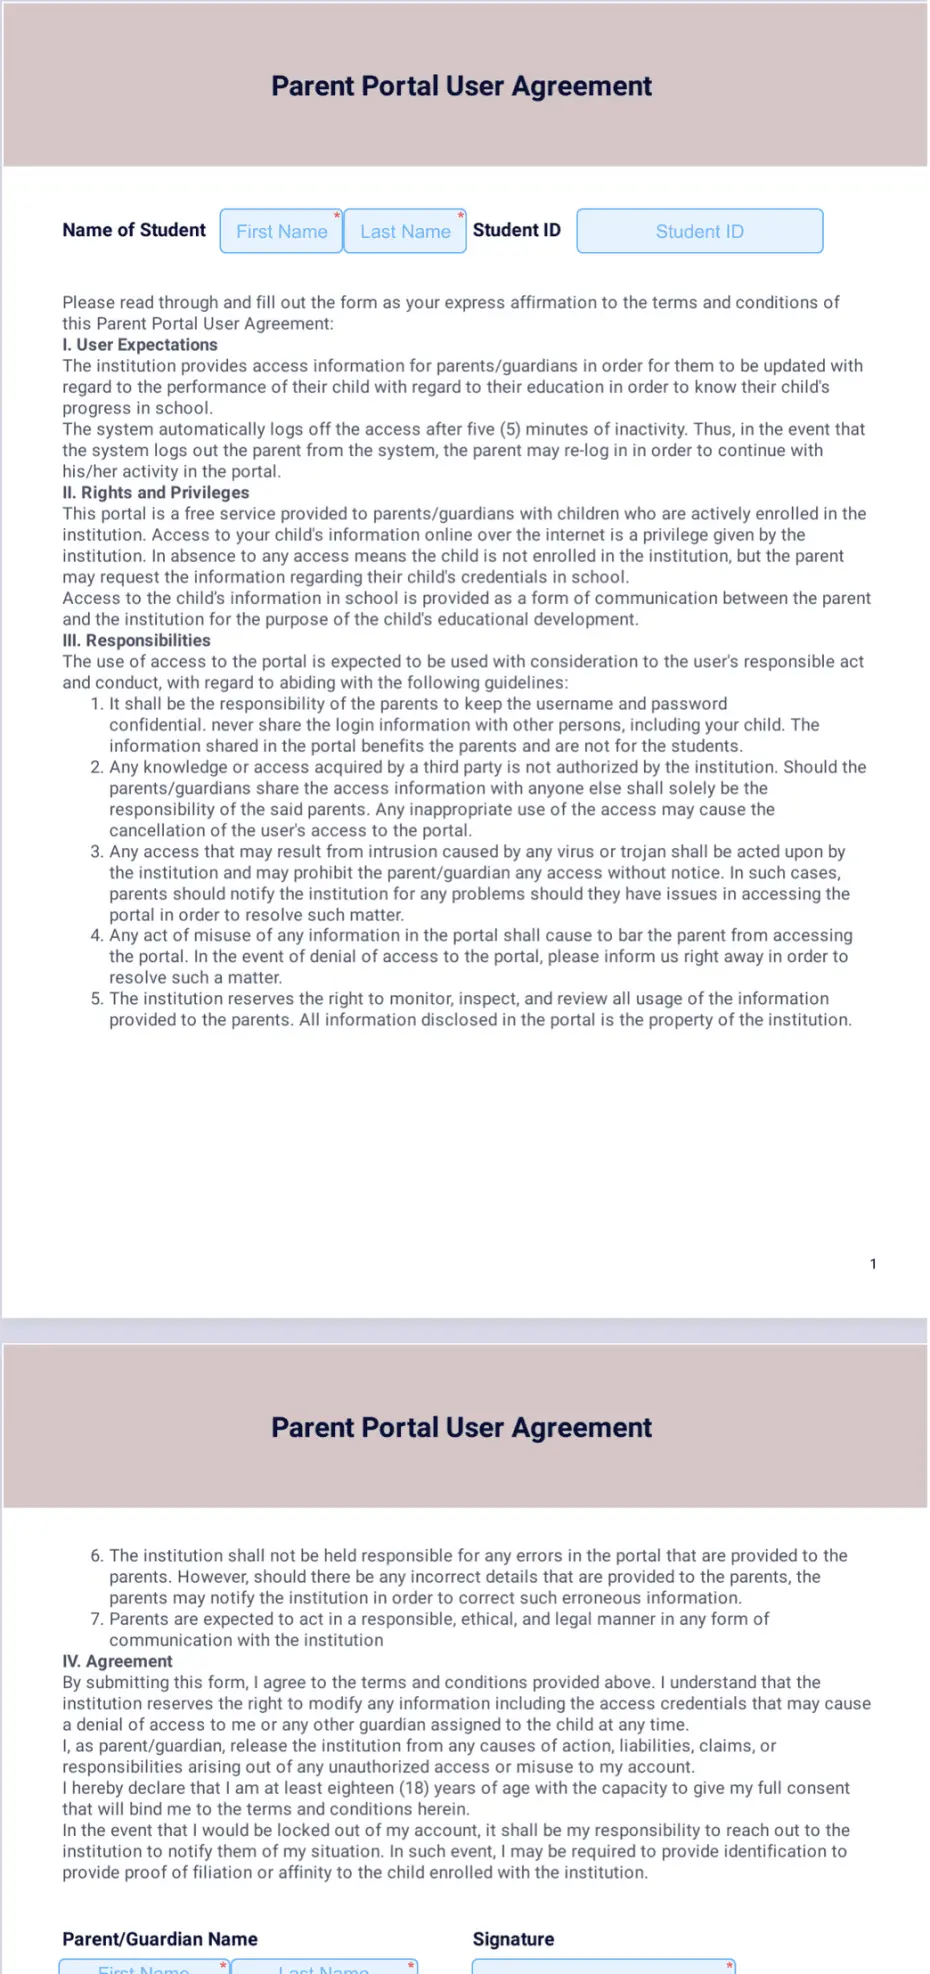 Parent Portal User Agreement